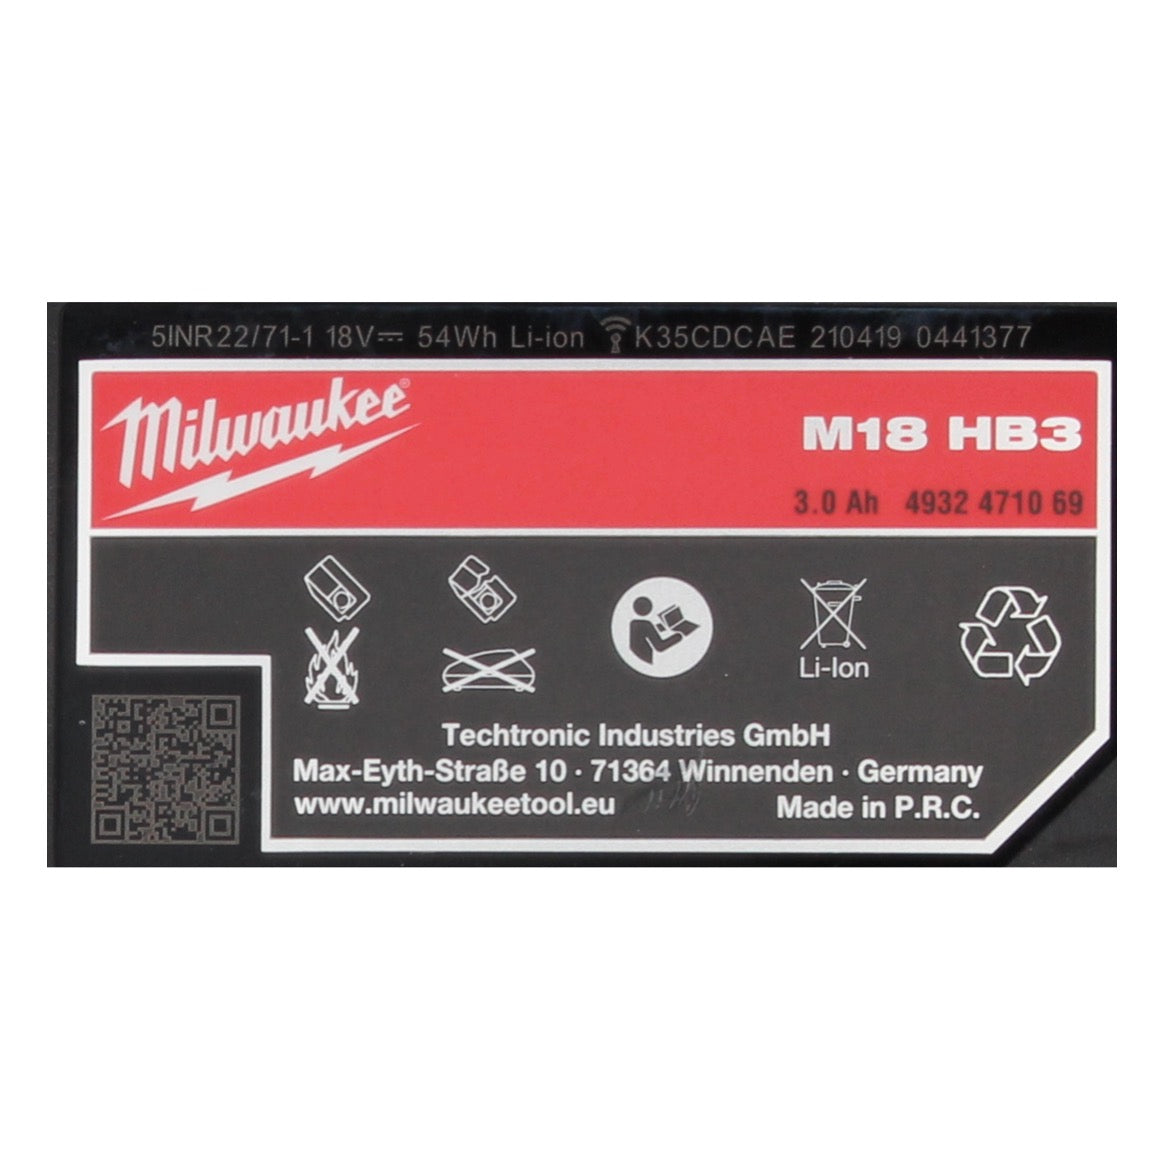 Milwaukee M18 HB3 High Output 3x 18 V 3,0 Ah / 3000 mAh Li-Ion Akku ( 3x 4932471069 ) mit Ladestandsanzeige - Toolbrothers